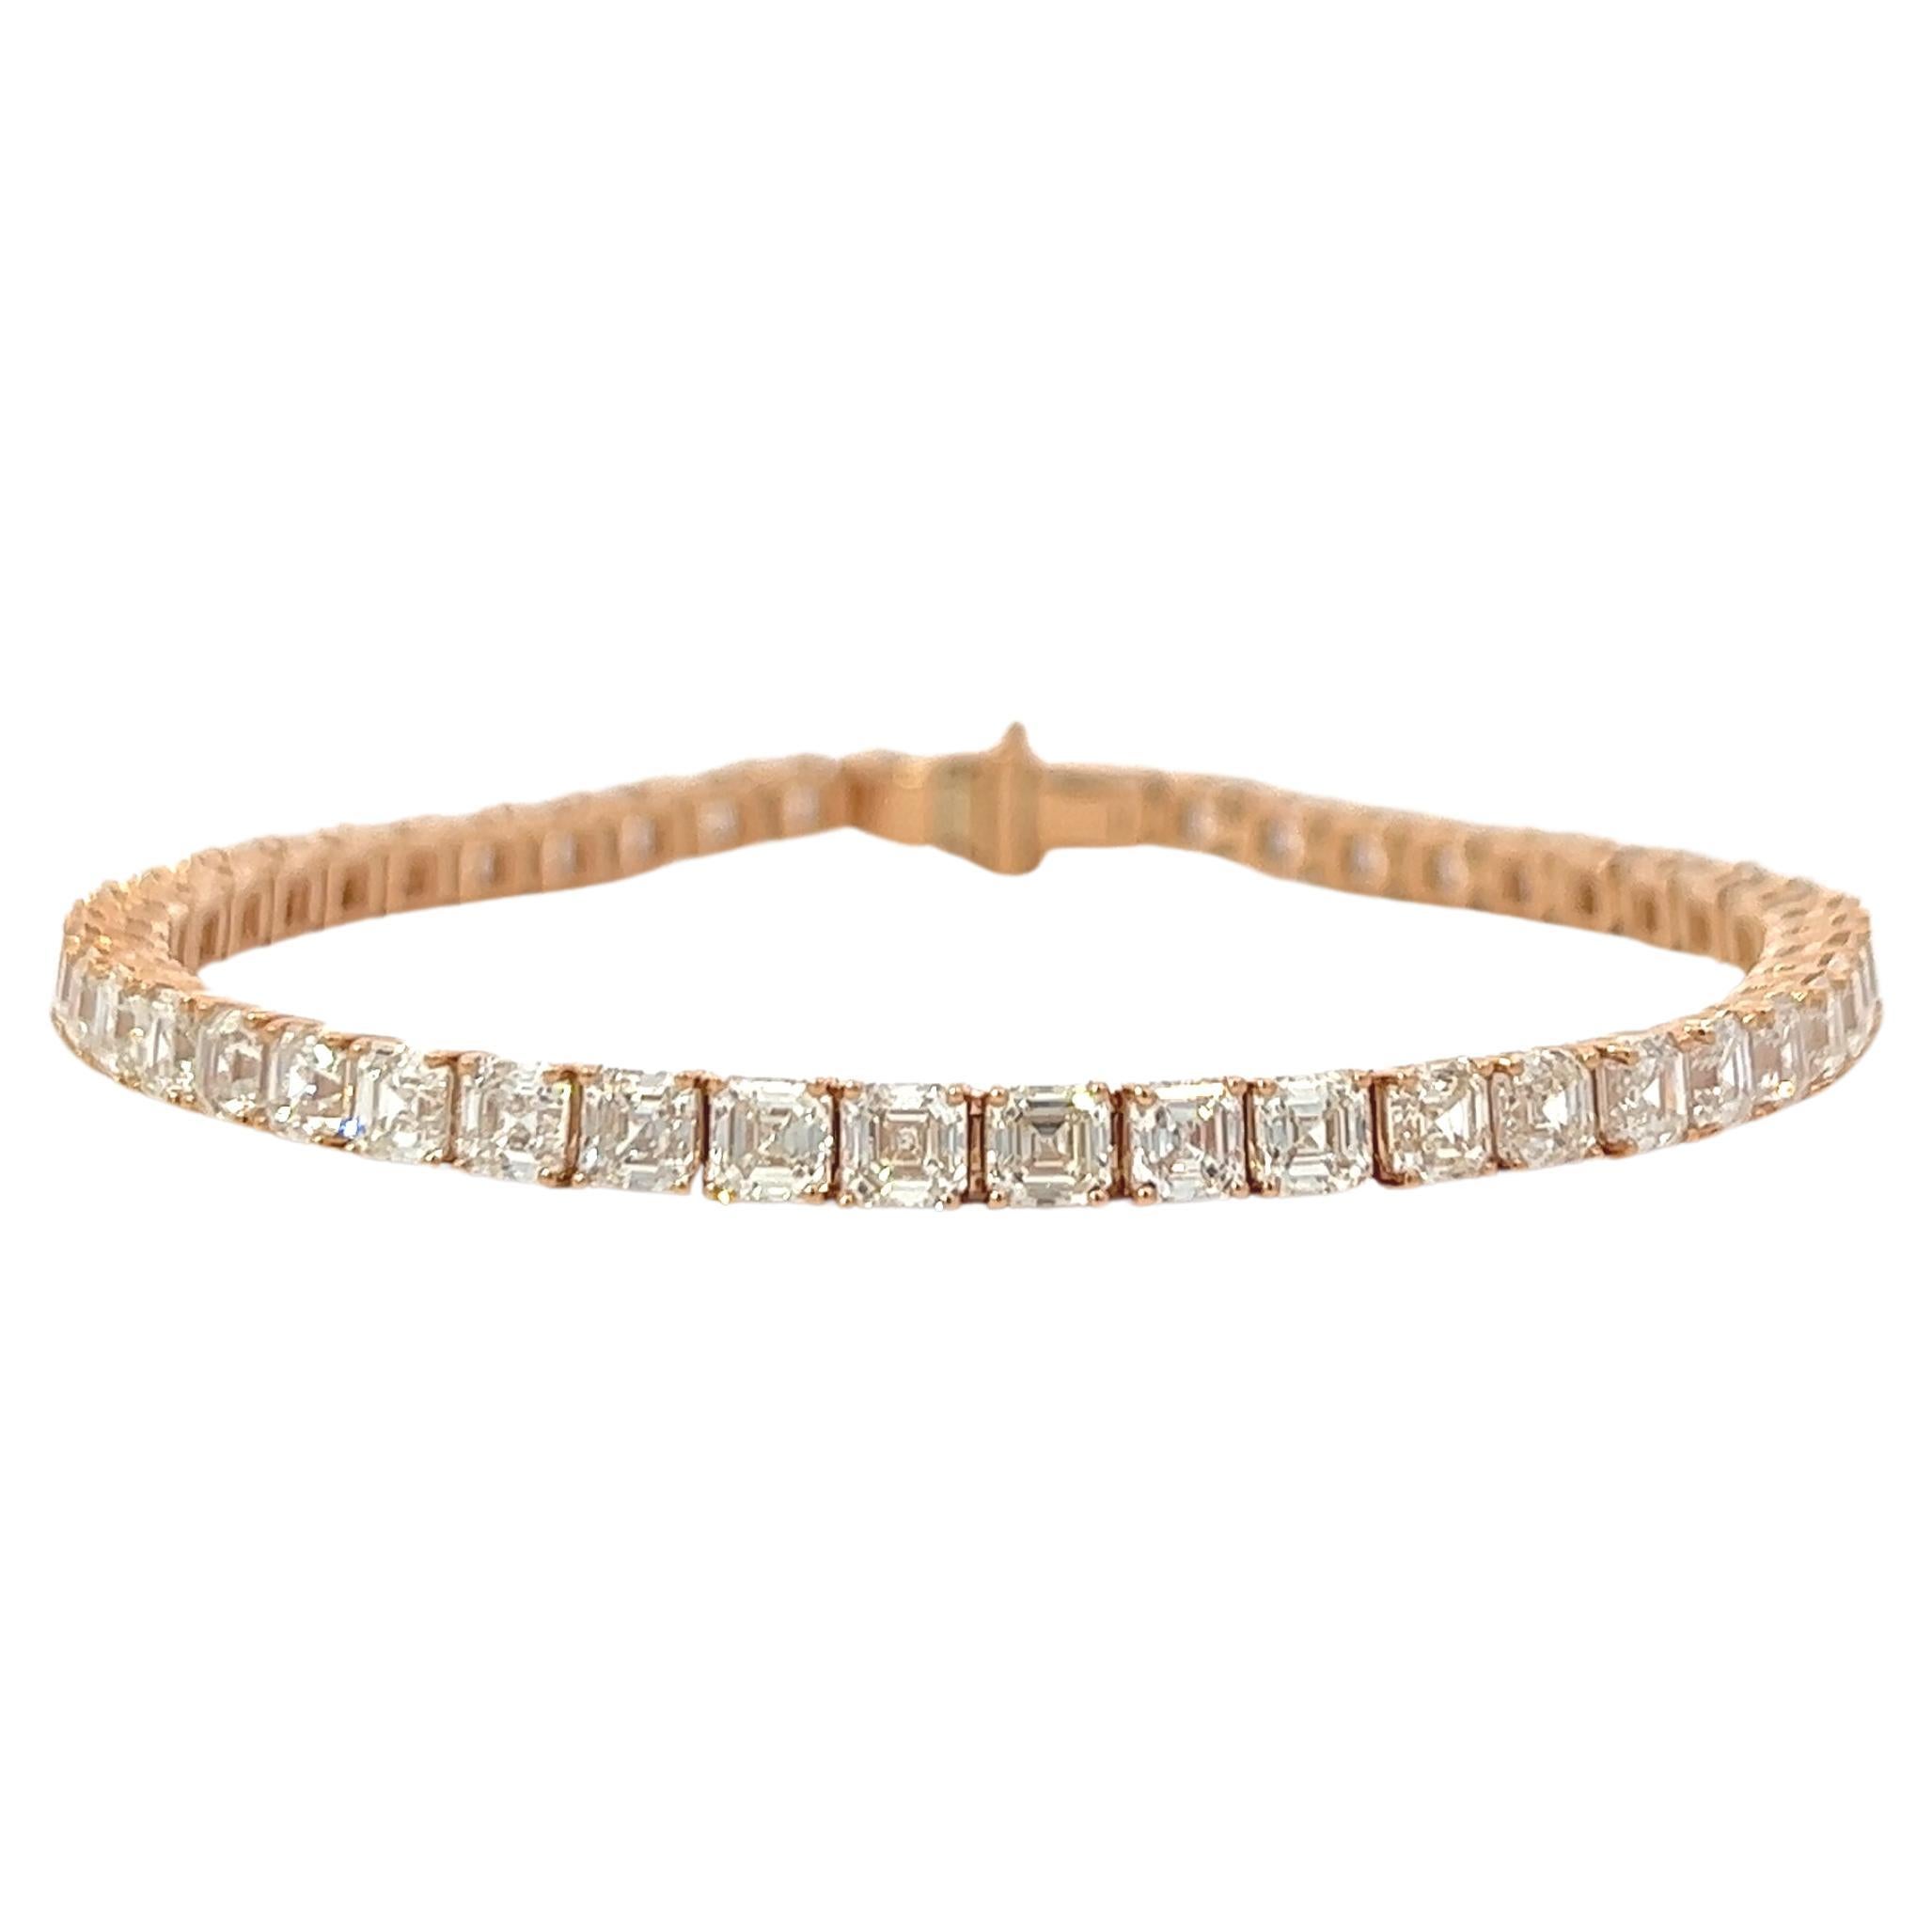 Bracelet tennis en or rose 18 carats avec diamants taille Asscher (11,70 carats VVS) par Arnav